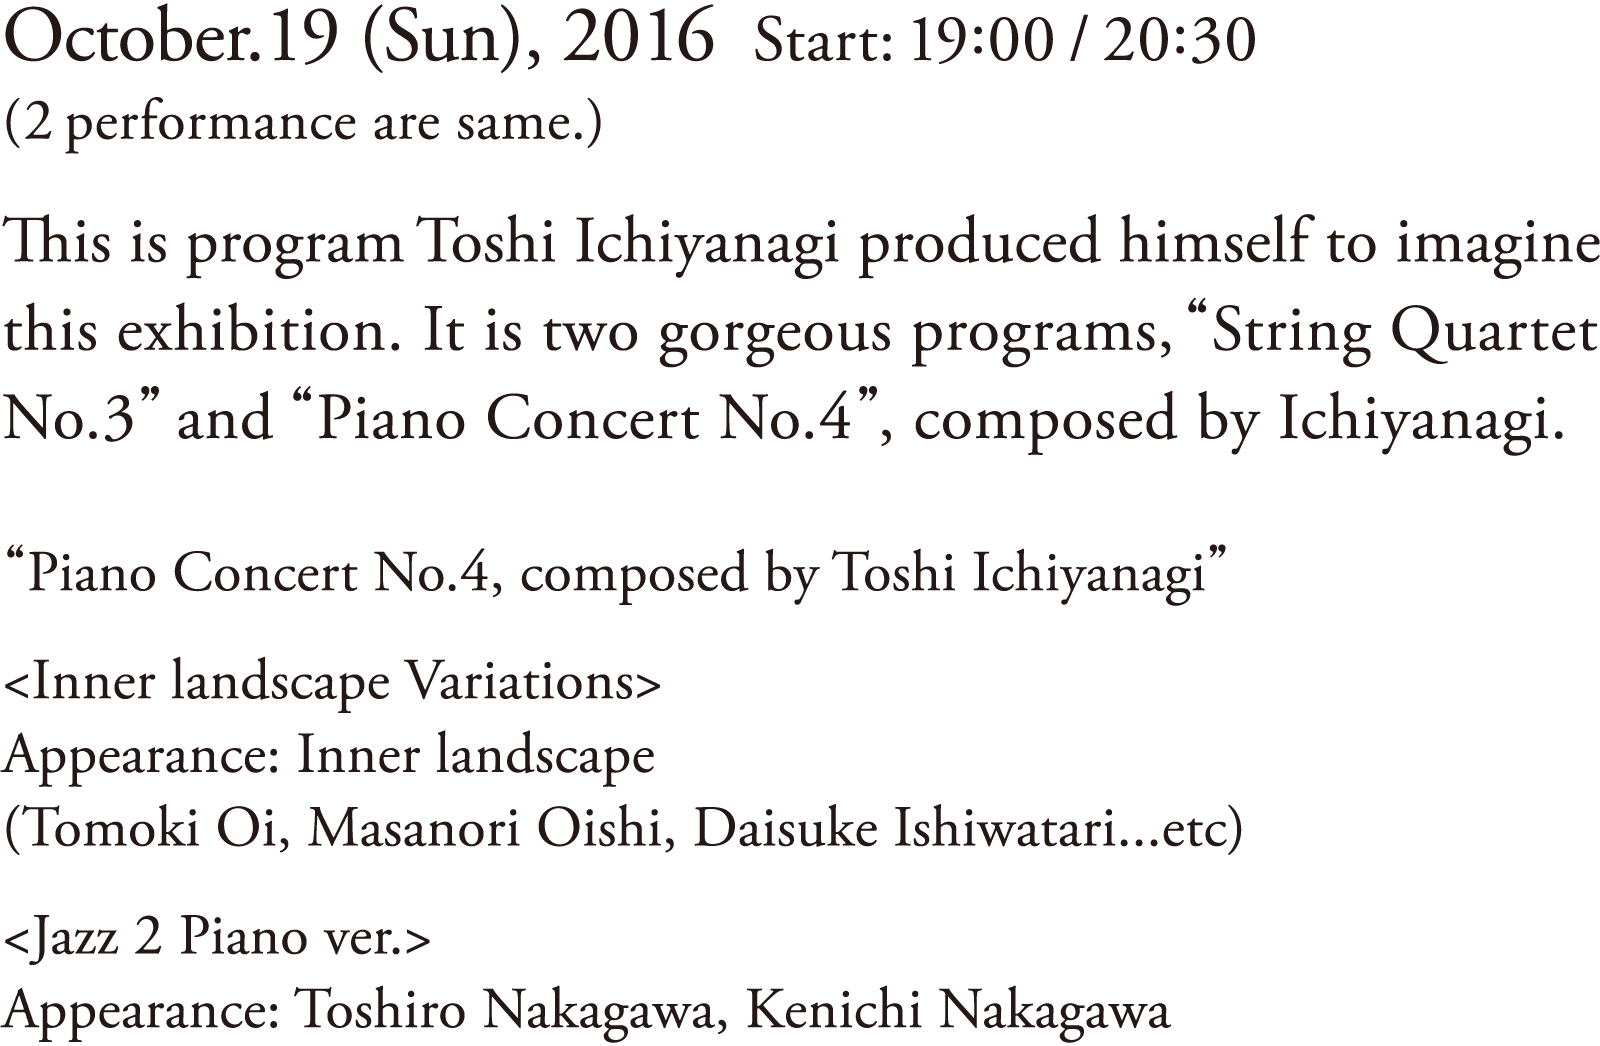 Date: October.19 (Sun), 2016 | Start: 19:00 / 20:30 (2 performance are same.) | This is program Toshi Ichiyanagi produced himself to imagine this exhibition. It is two gorgeous programs, “String Quartet No.3” and “Piano Concert No.4”, composed by Ichiyanagi. | “Piano Concert No.4, composed by Toshi Ichiyanagi” | <Inner landscape Variations> Appearance: Inner landscape (Tomoki Oi, Masanori Oishi, Daisuke Ishiwatari…etc) | <Jazz 2 Piano ver.> Appearance: Toshiro Nakagawa, Kenichi Nakagawa